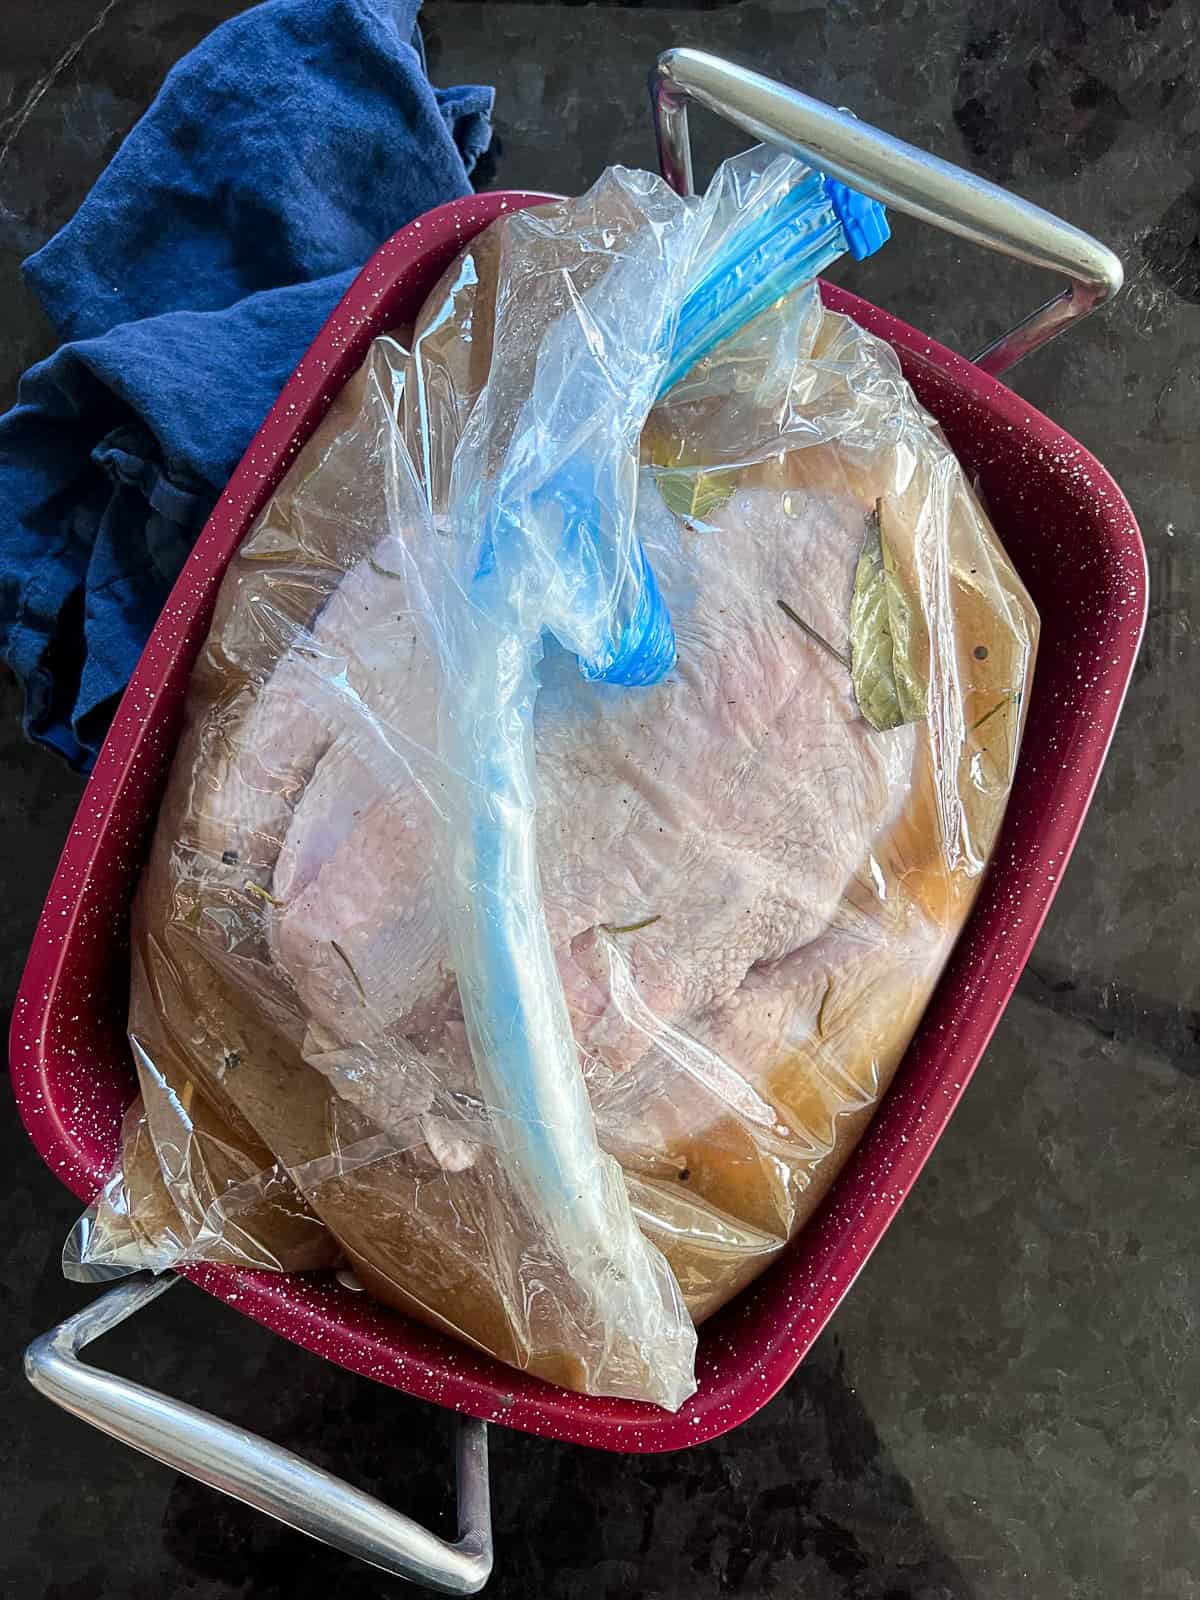 Fully Submerged Turkey Sealed Inside a Brining Bag